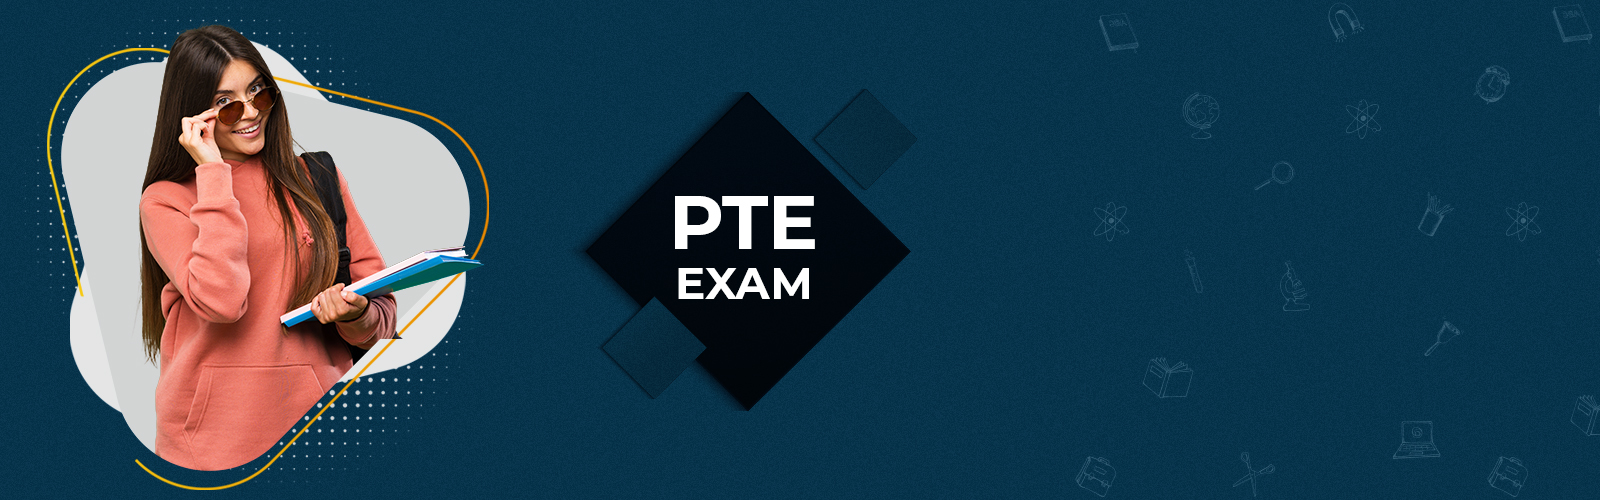 PTE Exam